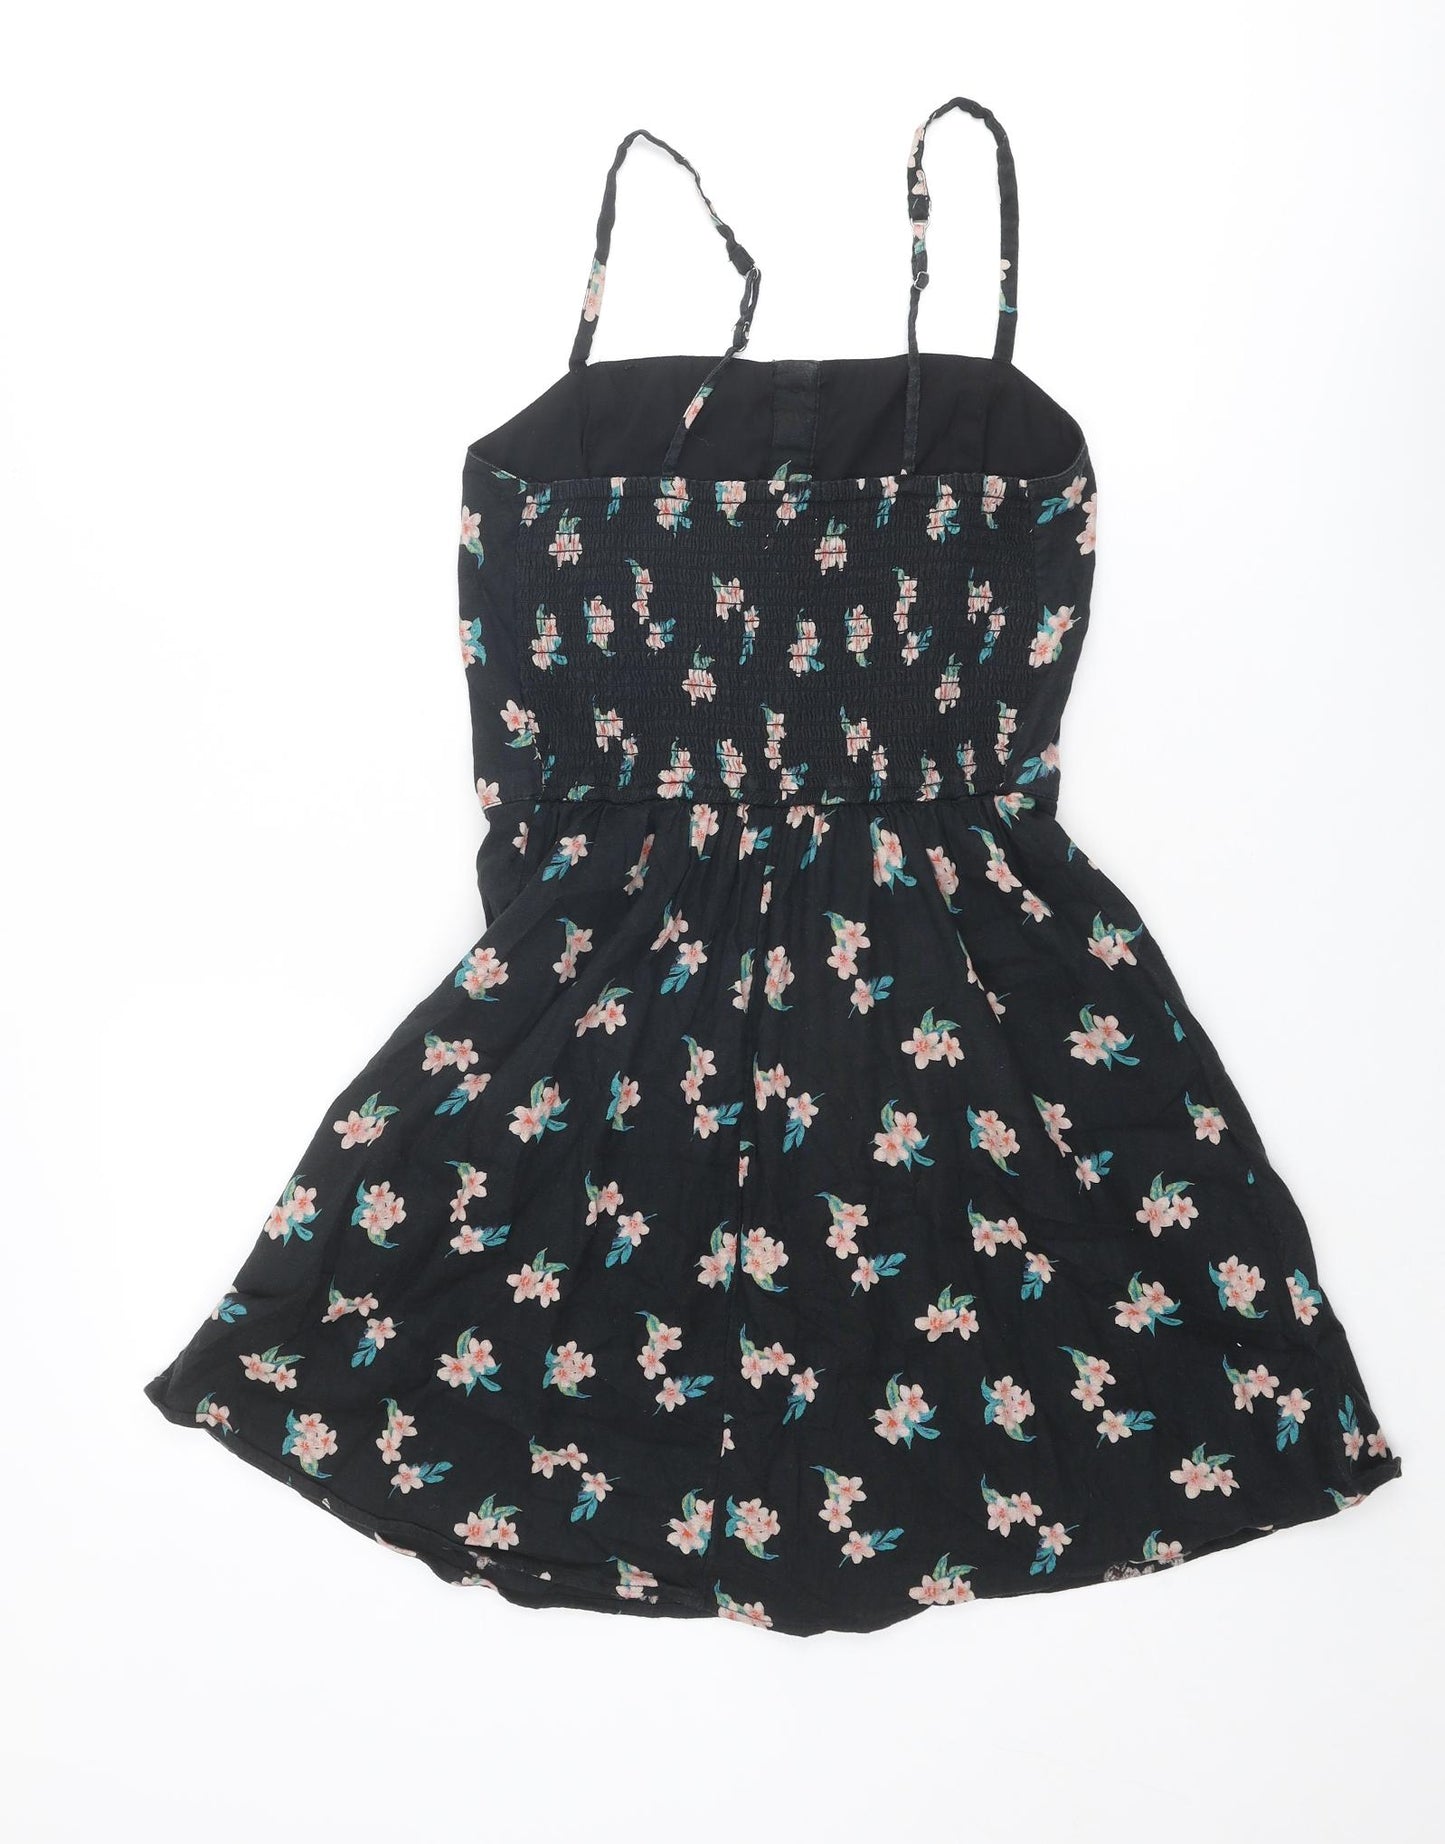 Hollister Womens Black Floral Cotton Slip Dress Size M Square Neck Pullover